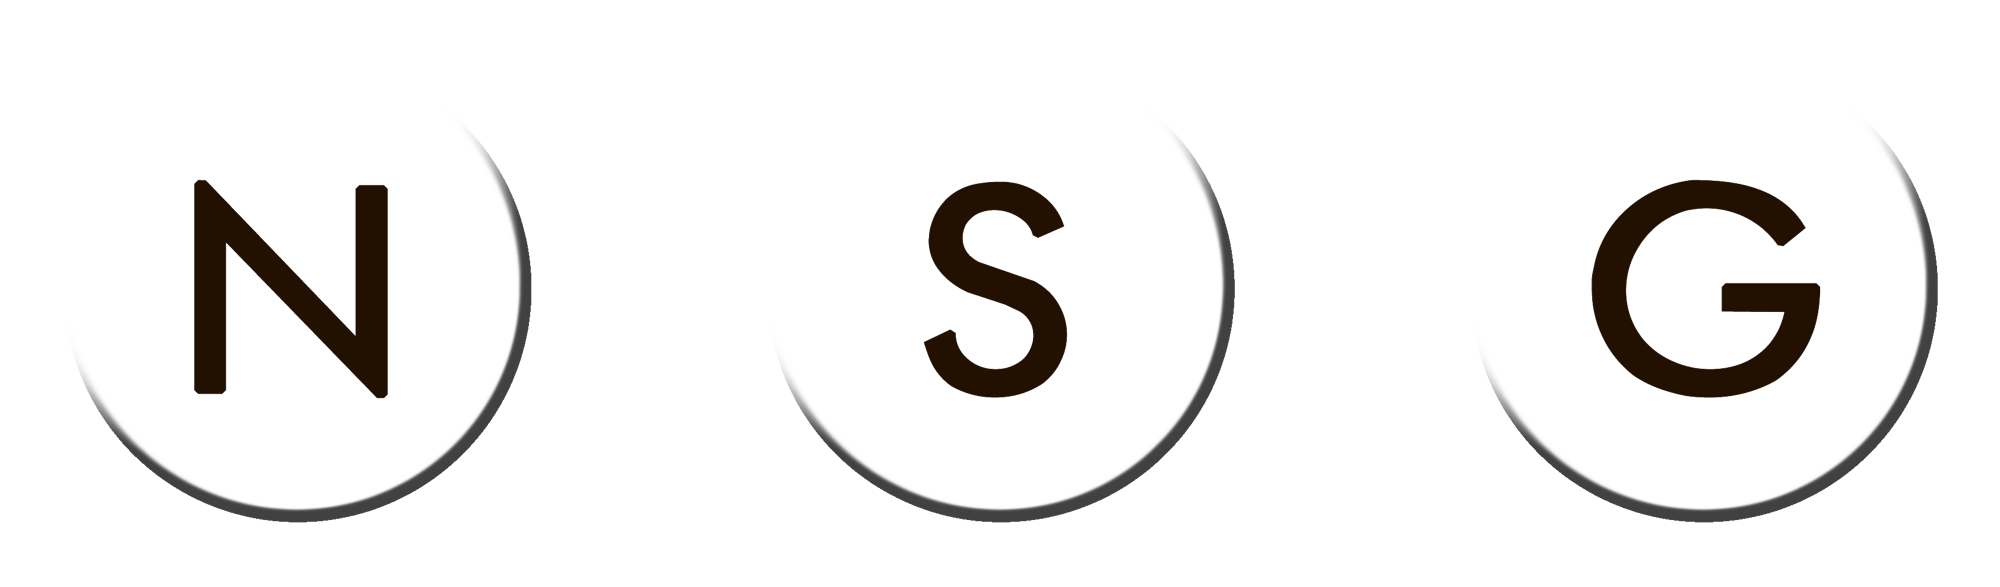 NSG_logotipo_1